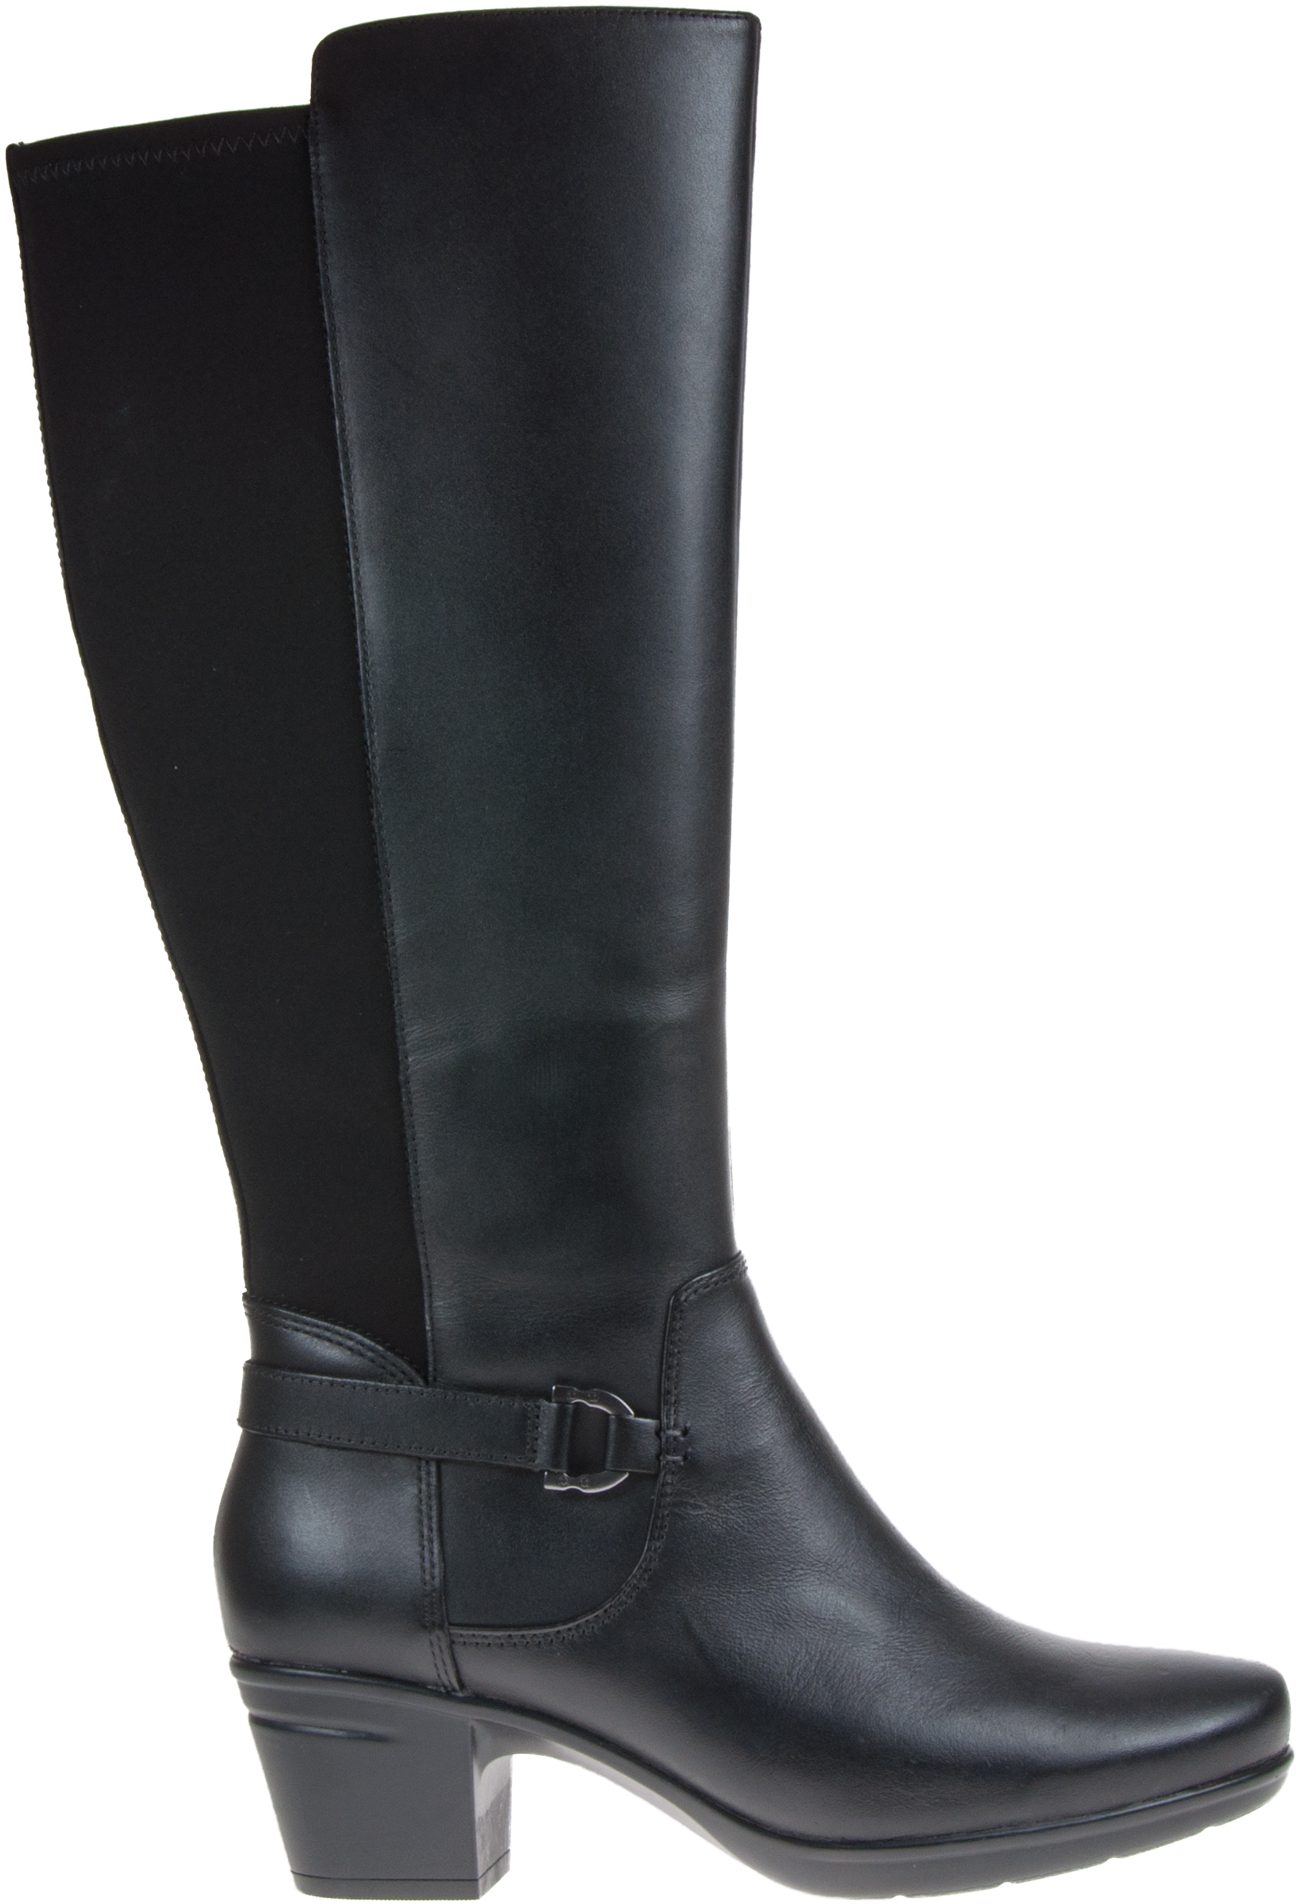 Clarks Emslie March Black Leather 26136682 - Knee High Boots ...